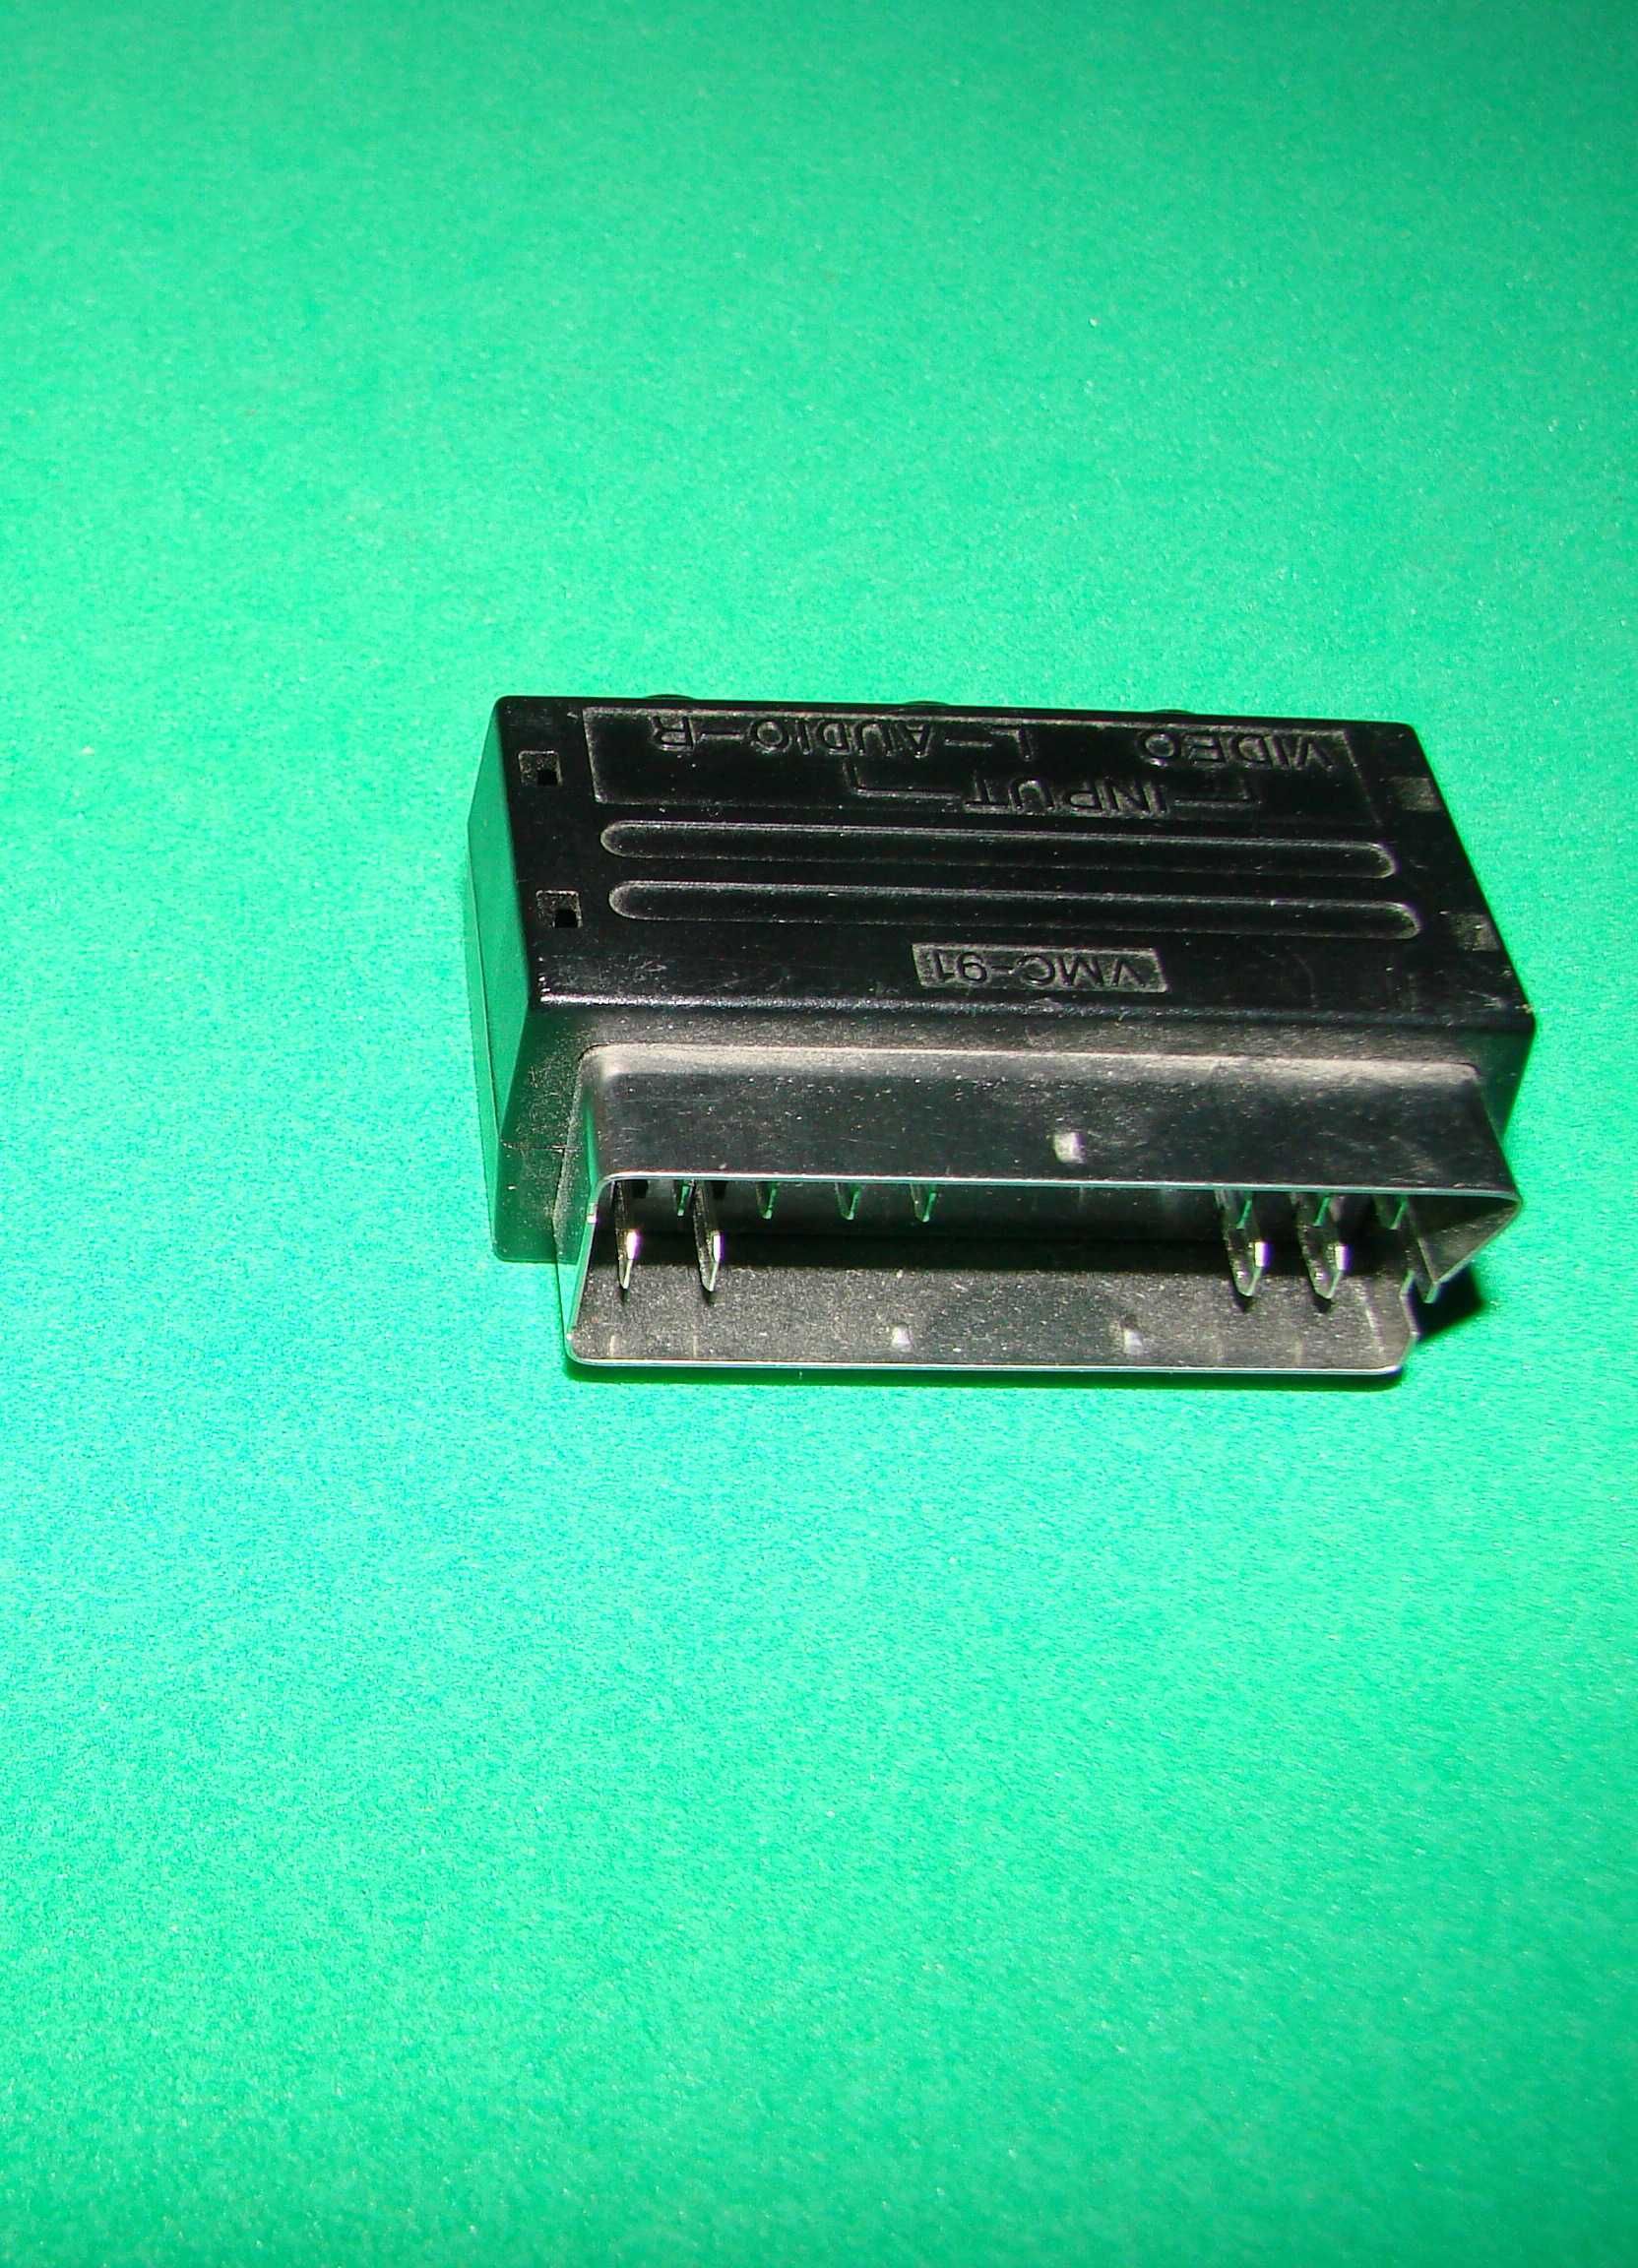 Разъём мини-джек, Jack 3,5, переходник, штекер аудио видео SCART, RCA